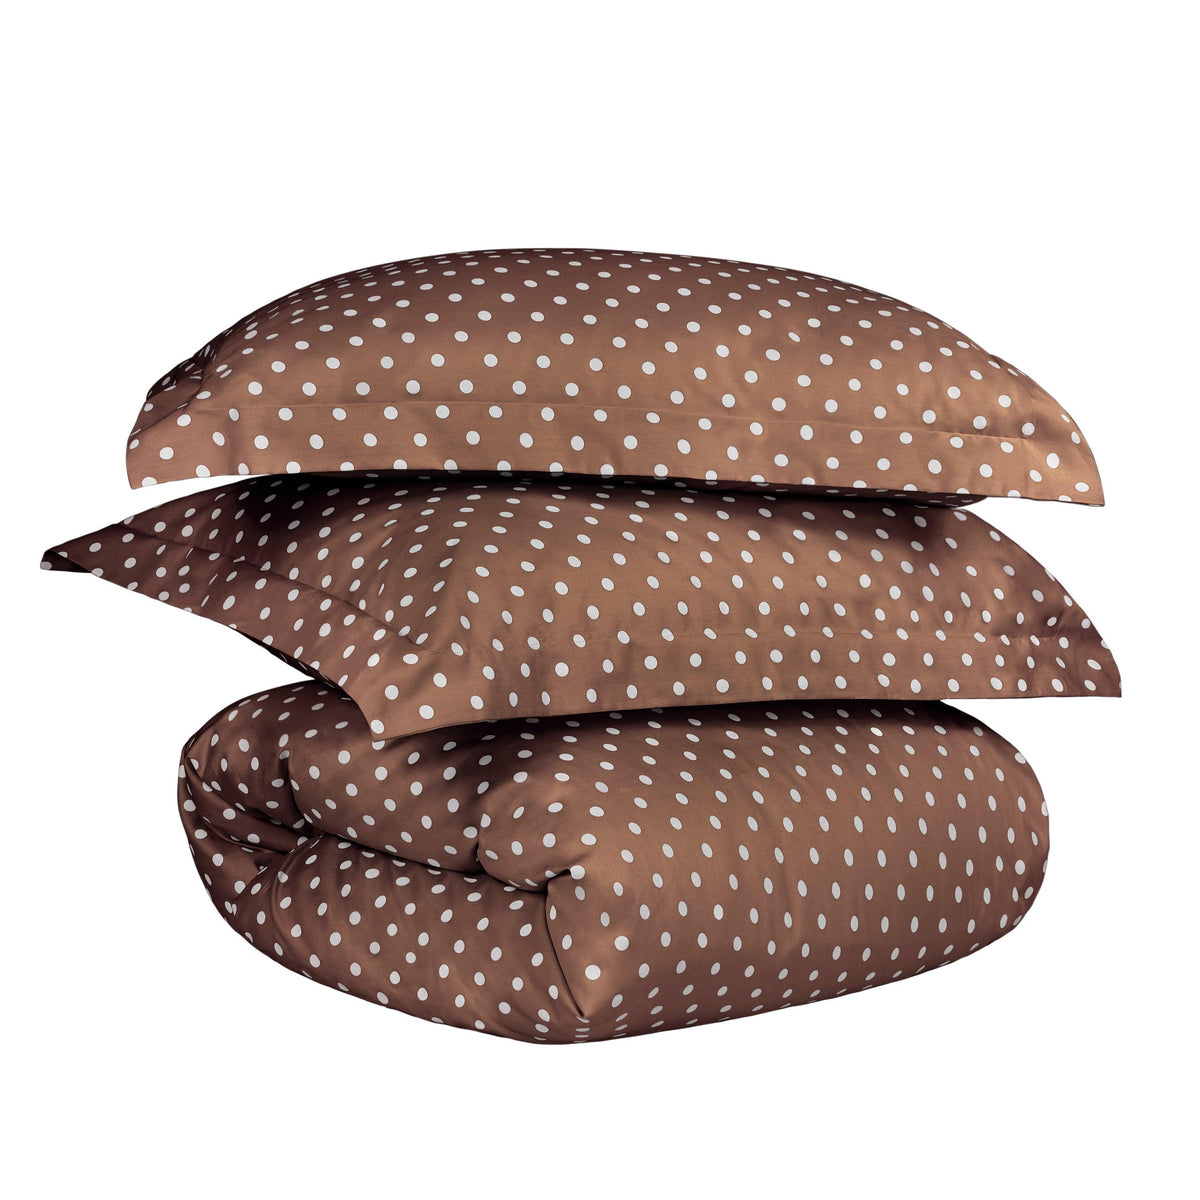 Superior Cotton Blend Polka Dot Luxury Plush Duvet Cover Set - Taupe